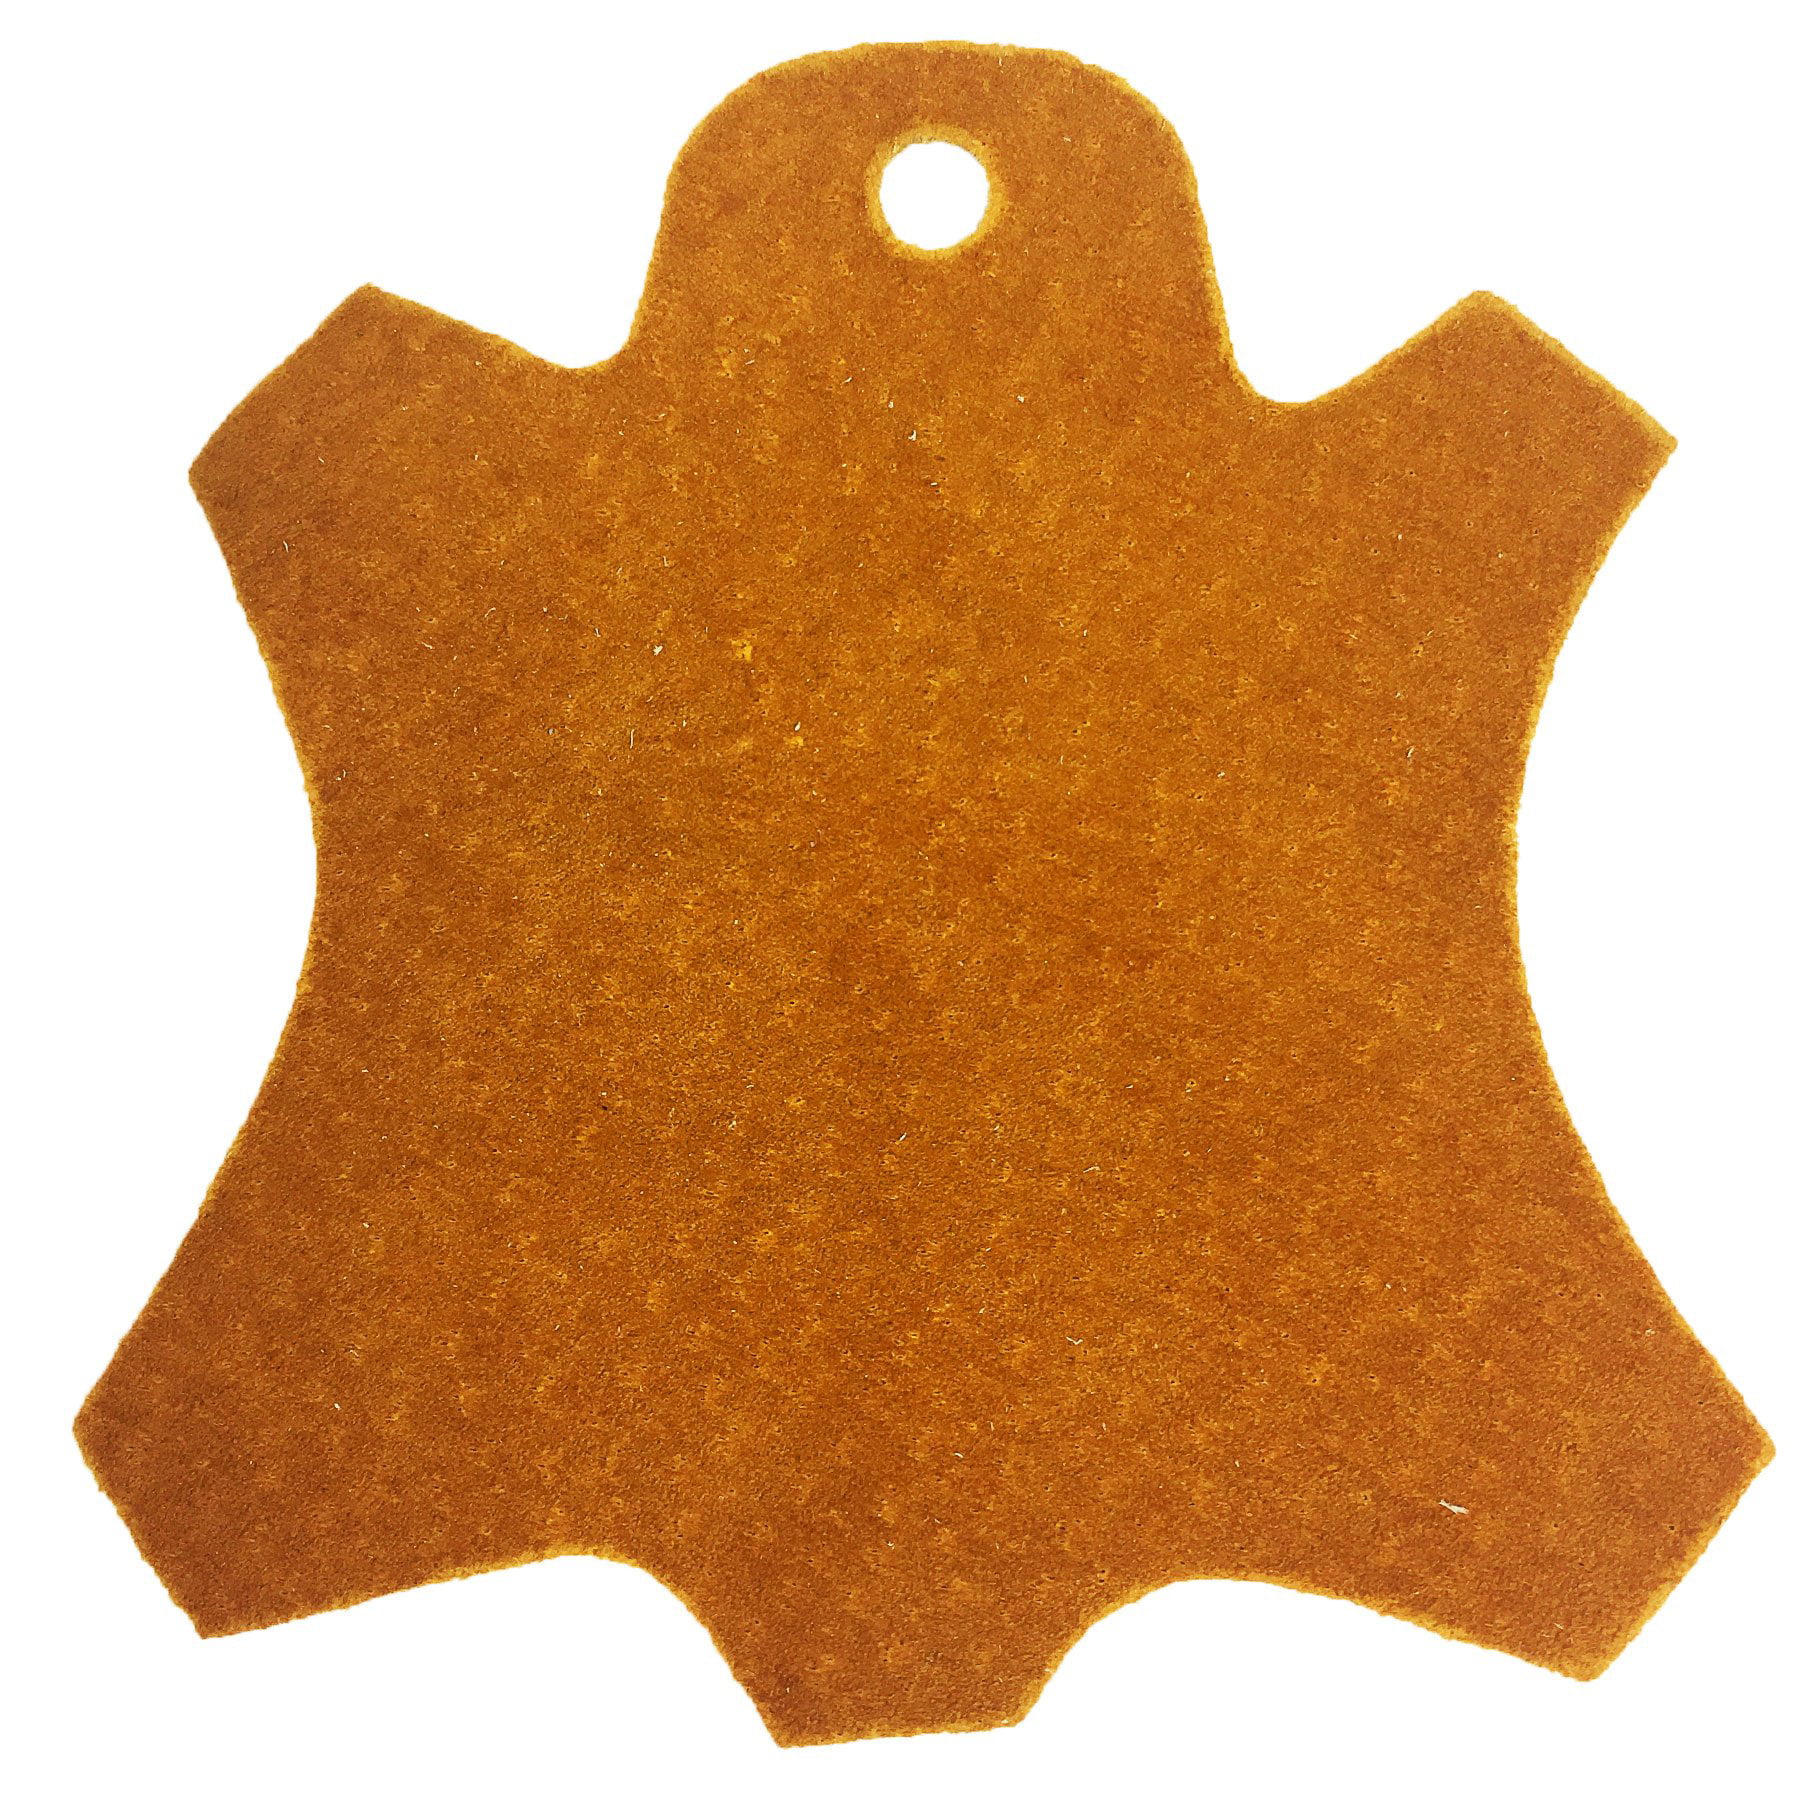 Fiebing's Leather Dye - Medium Brown / 4 oz 